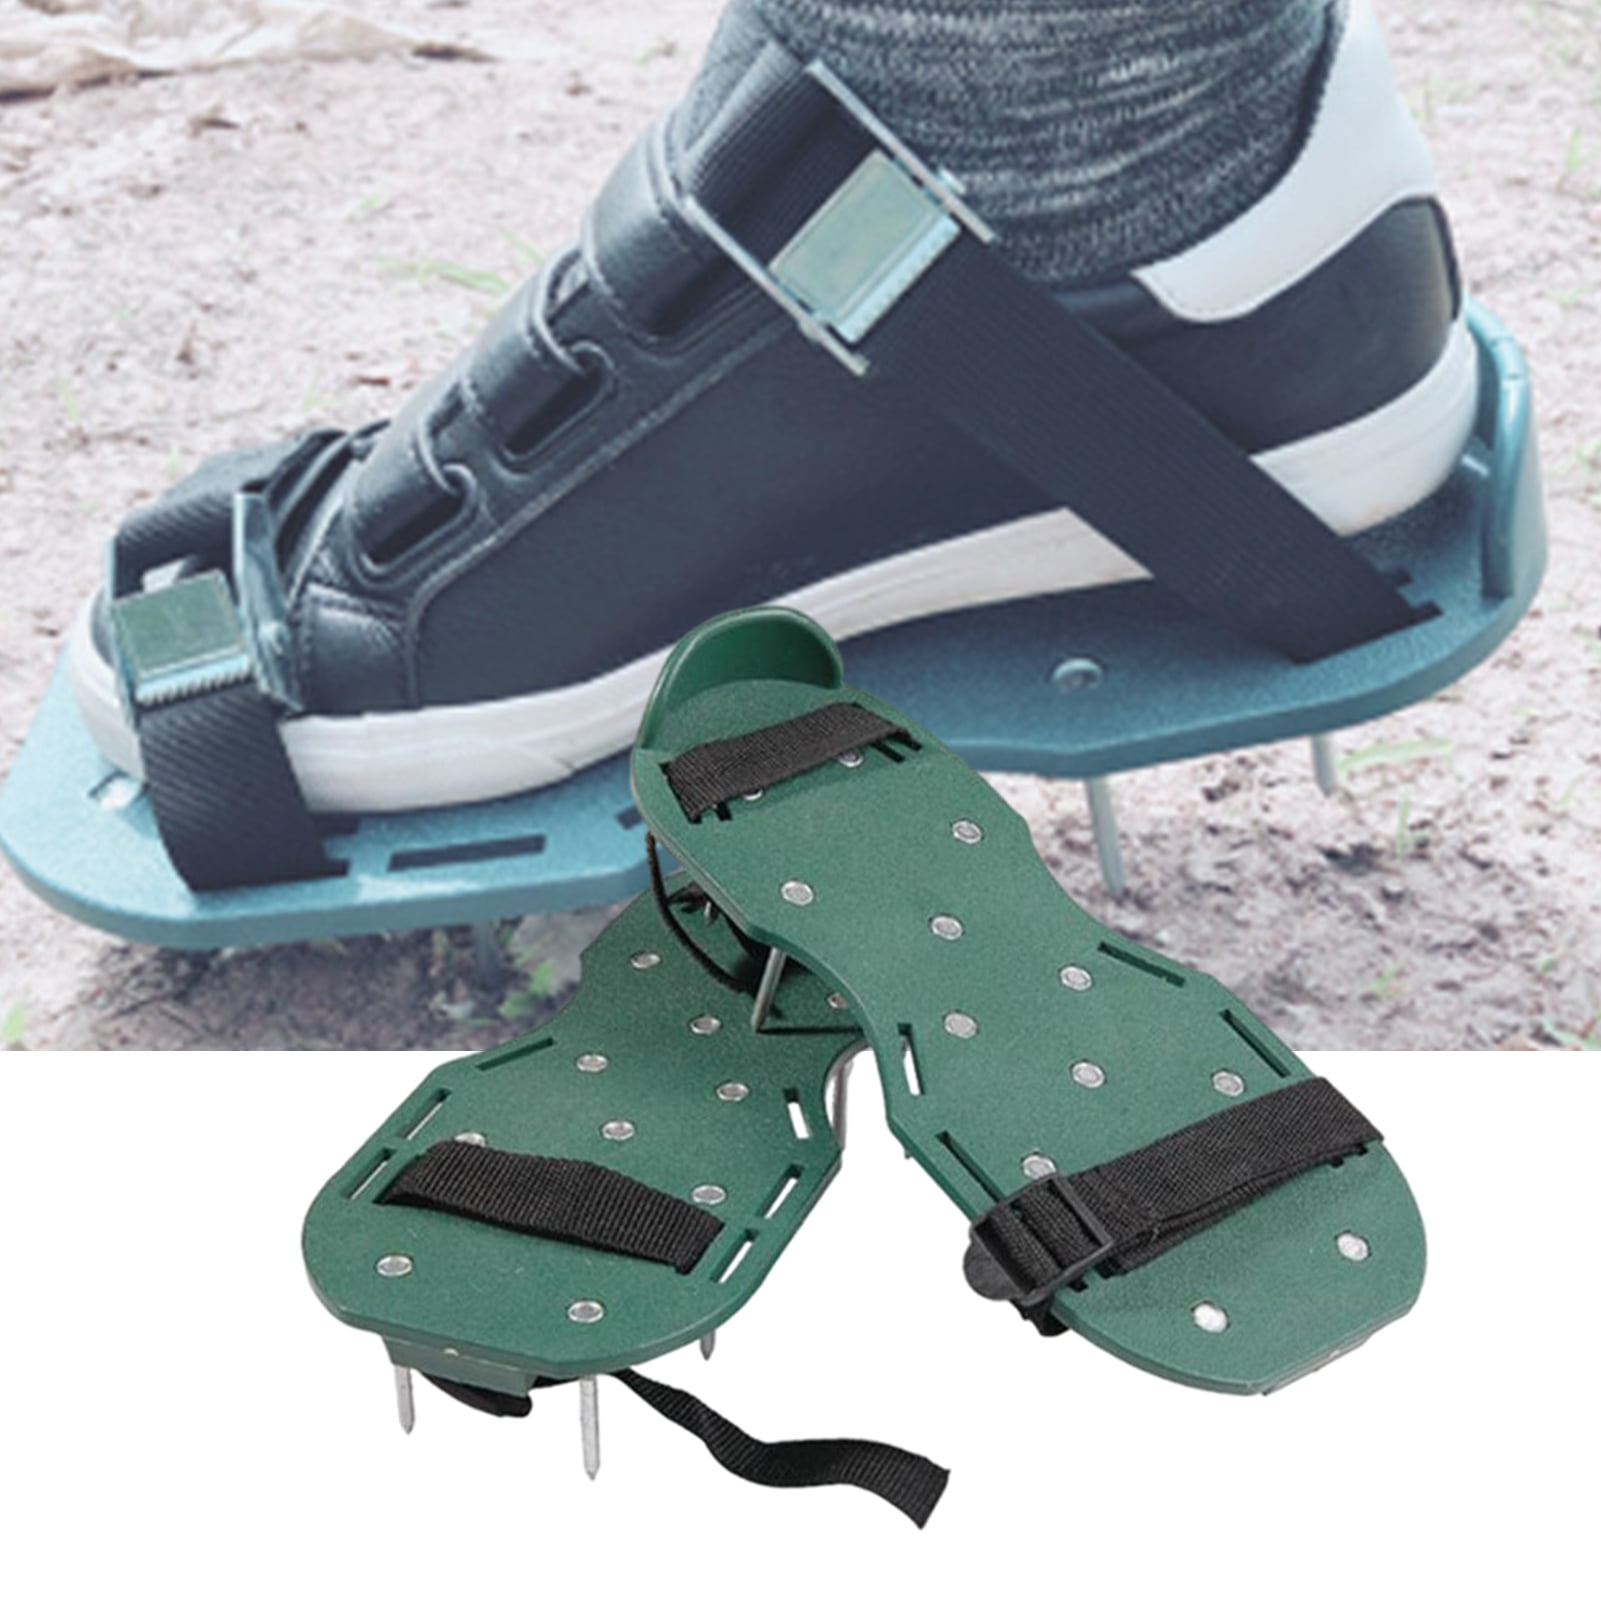 Lawn Aerator Sandals Shoes Air Fertilize Water Yard Equipment Garden Tool New 